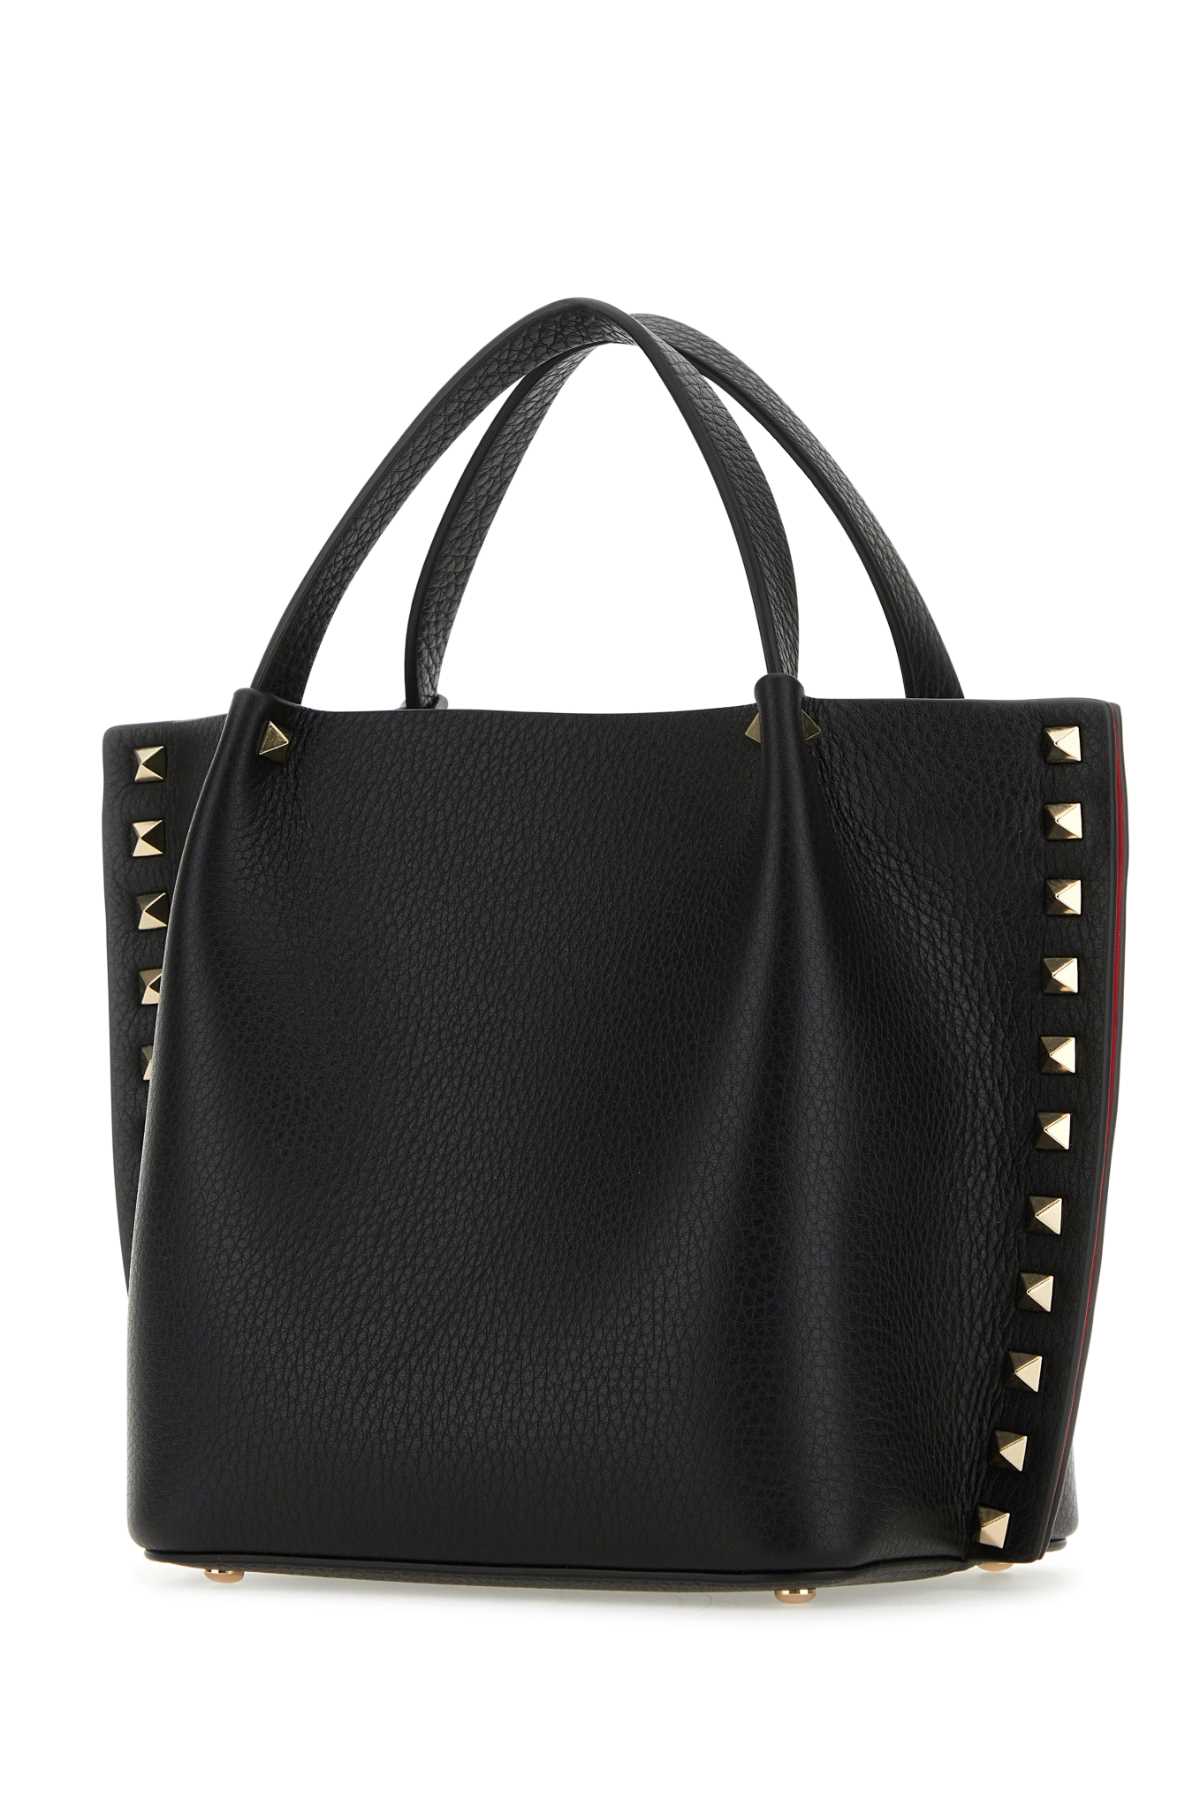 Valentino Garavani Black Leather Rockstud Handbag In Nero